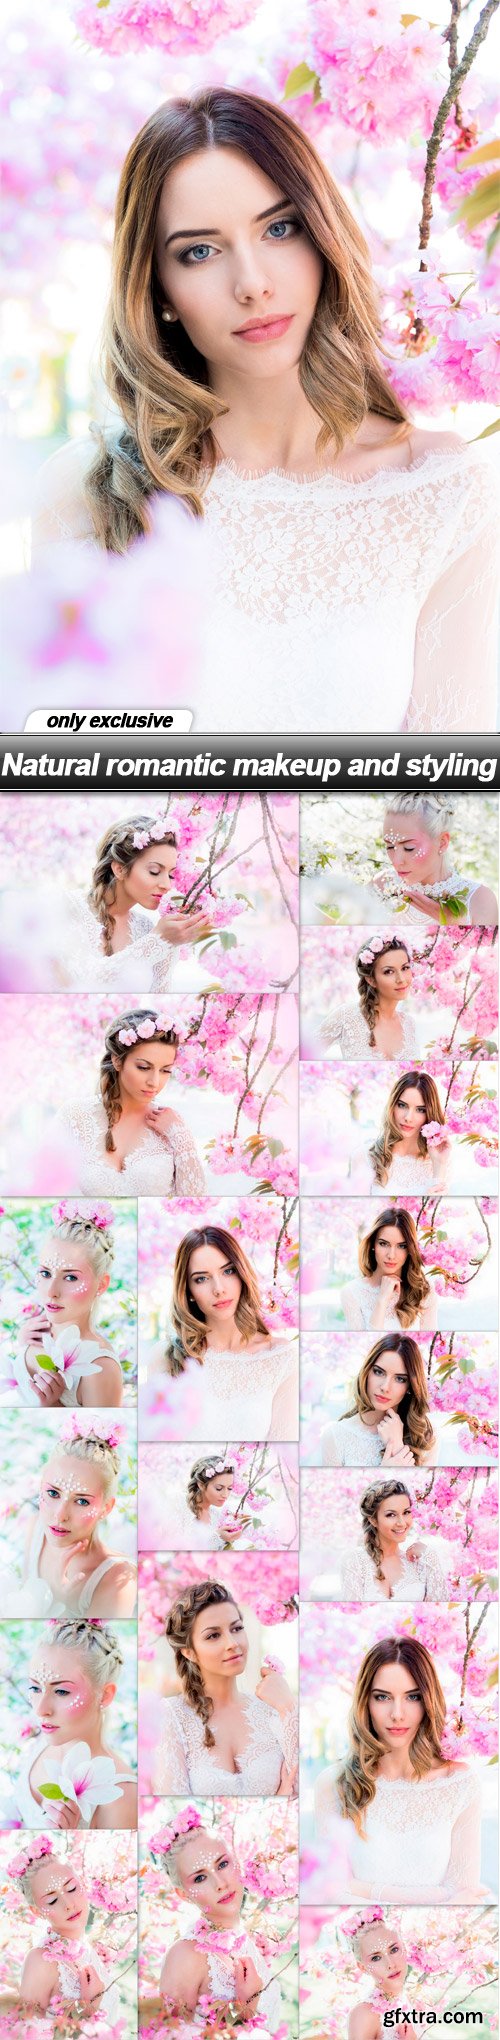 Natural romantic makeup and styling - 18 UHQ JPEG